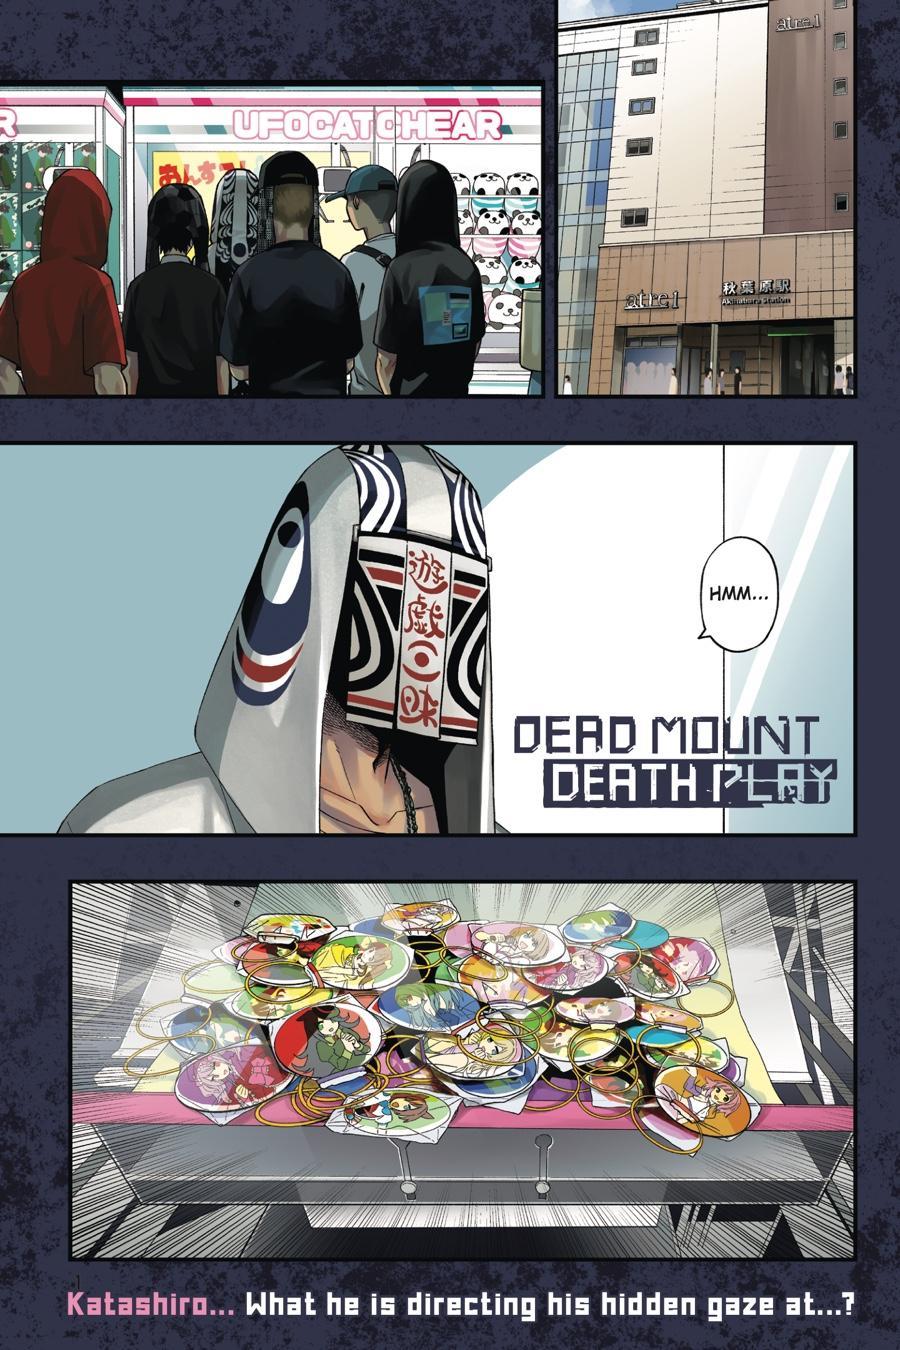 Dead Mount Death Play 93 Katashiro Dead Mount Death Play Wiki Fandom, 41% OFF